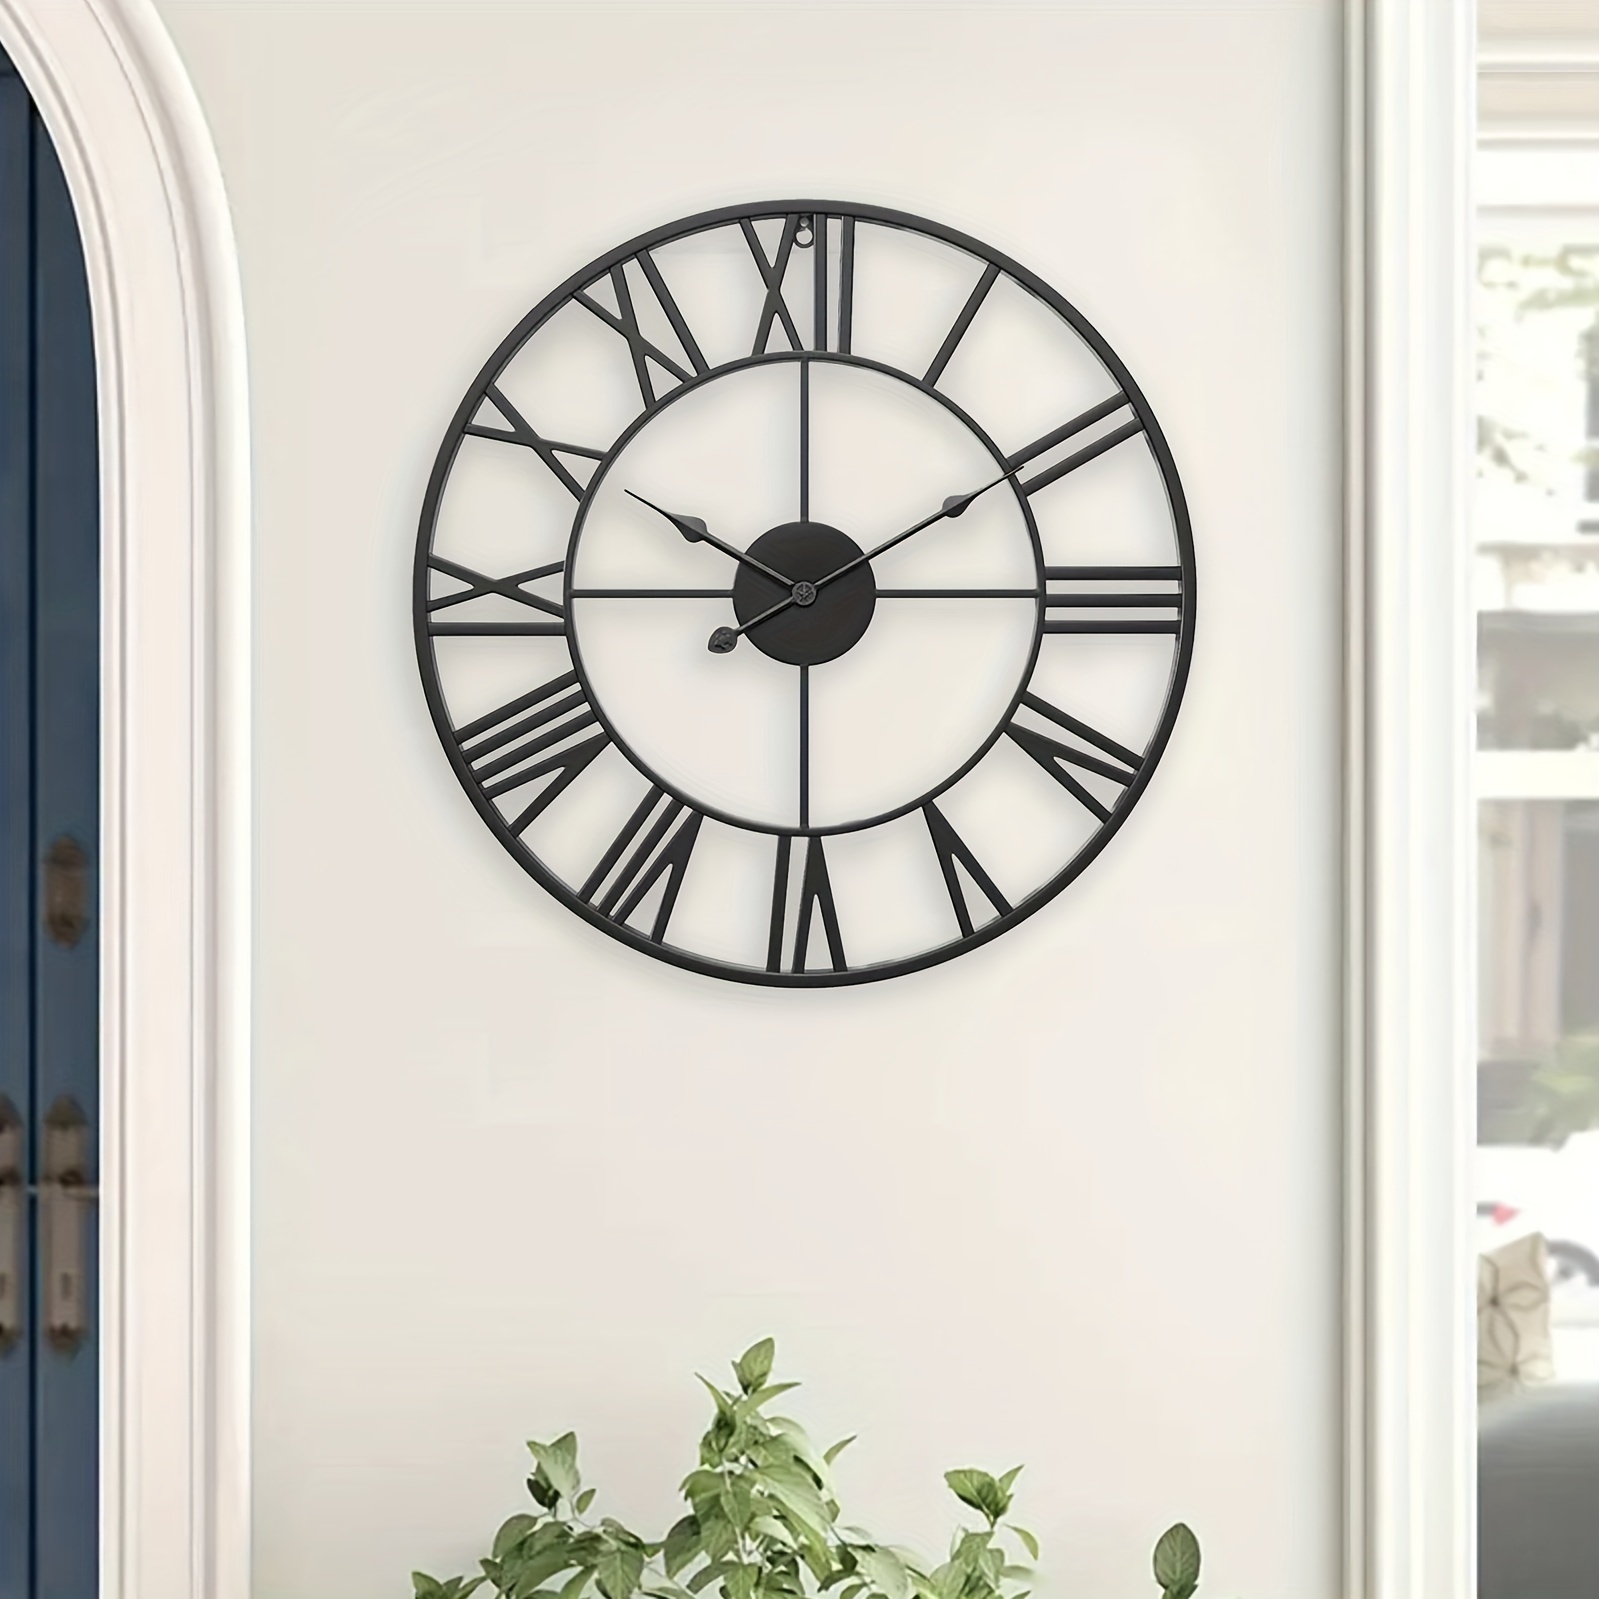  Reloj de pared grande de 30 pulgadas, silencioso, sin tictac,  funciona con pilas, moderno reloj de pared analógico redondo de metal  redondo para interiores y exteriores, para sala de estar, cocina, 